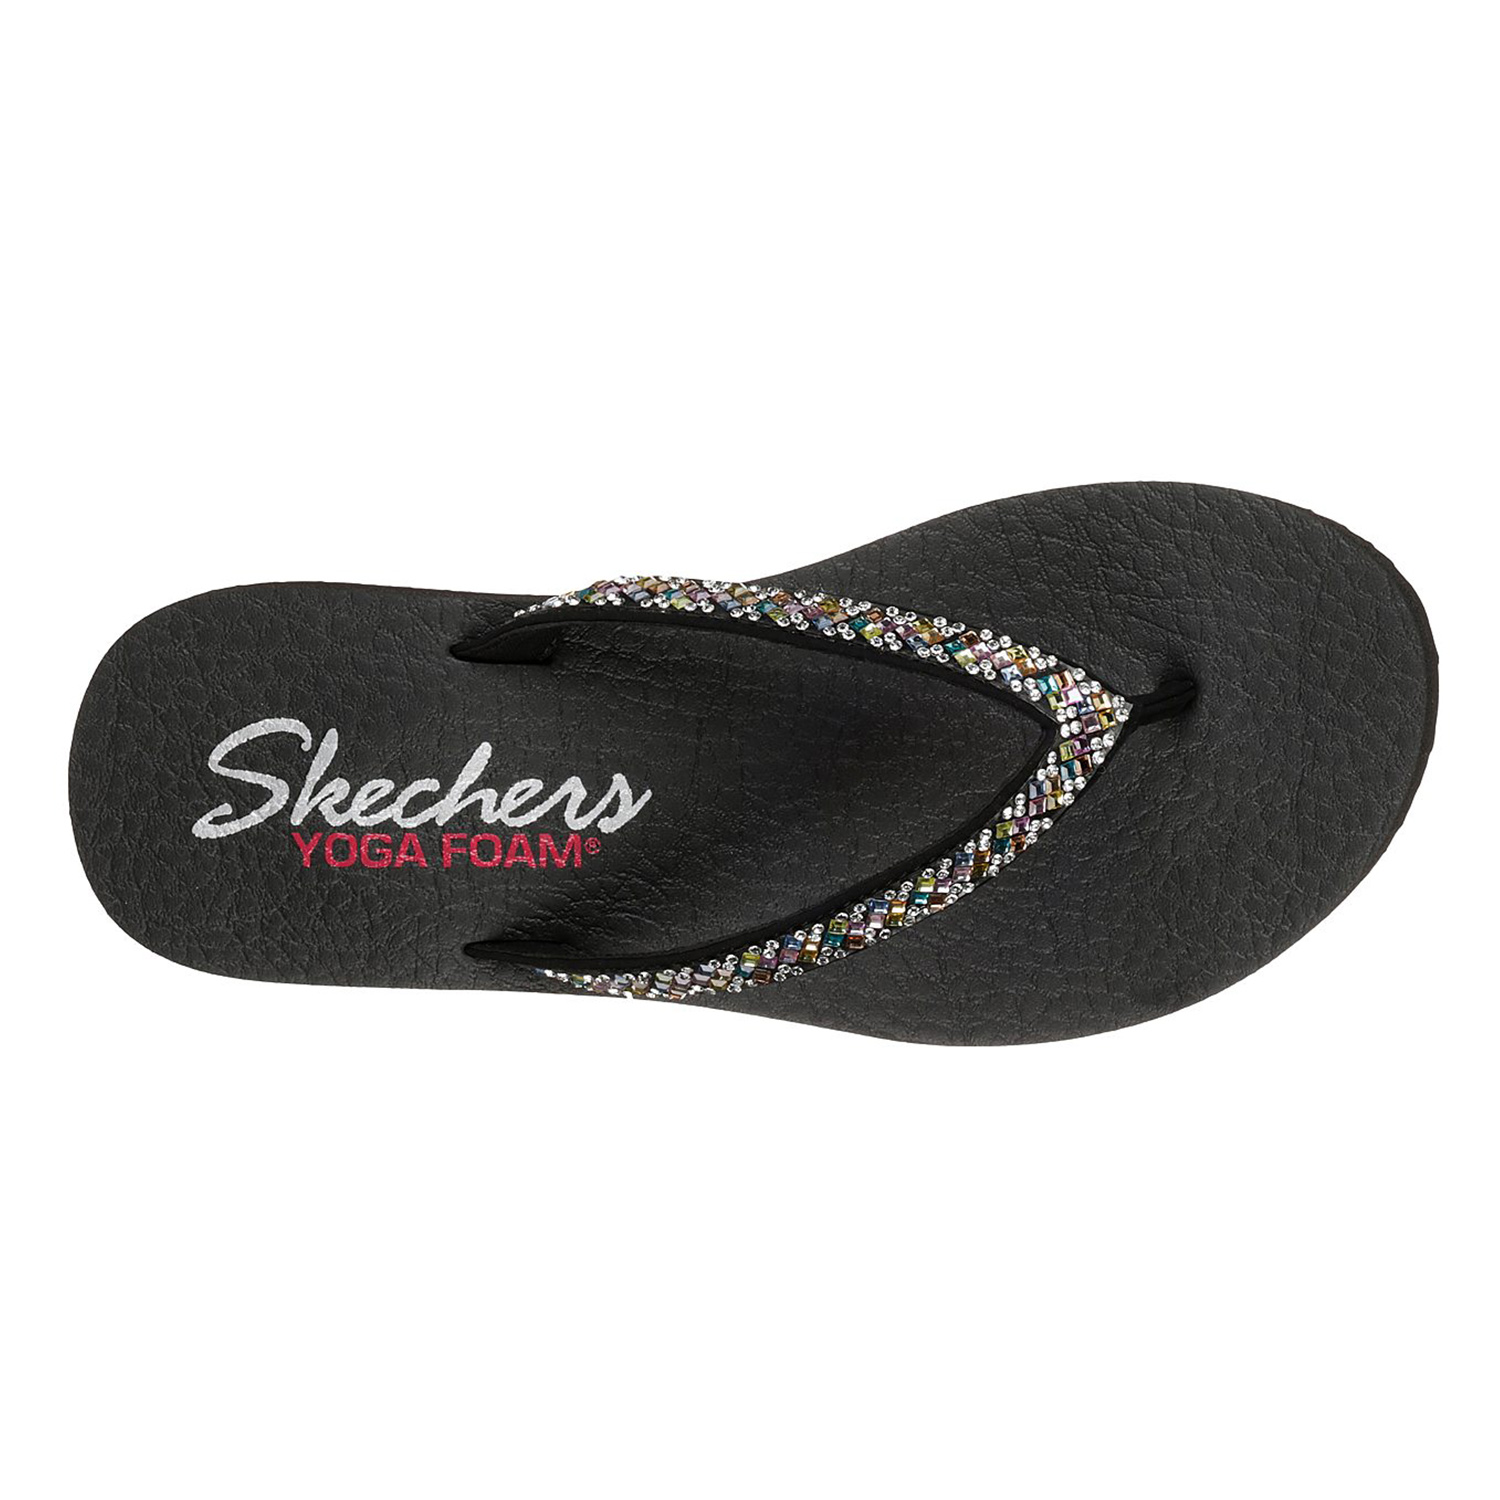 Skechers Womens Meditation Yoga Foam Toe Post Flip Flops Ladies Summer ...